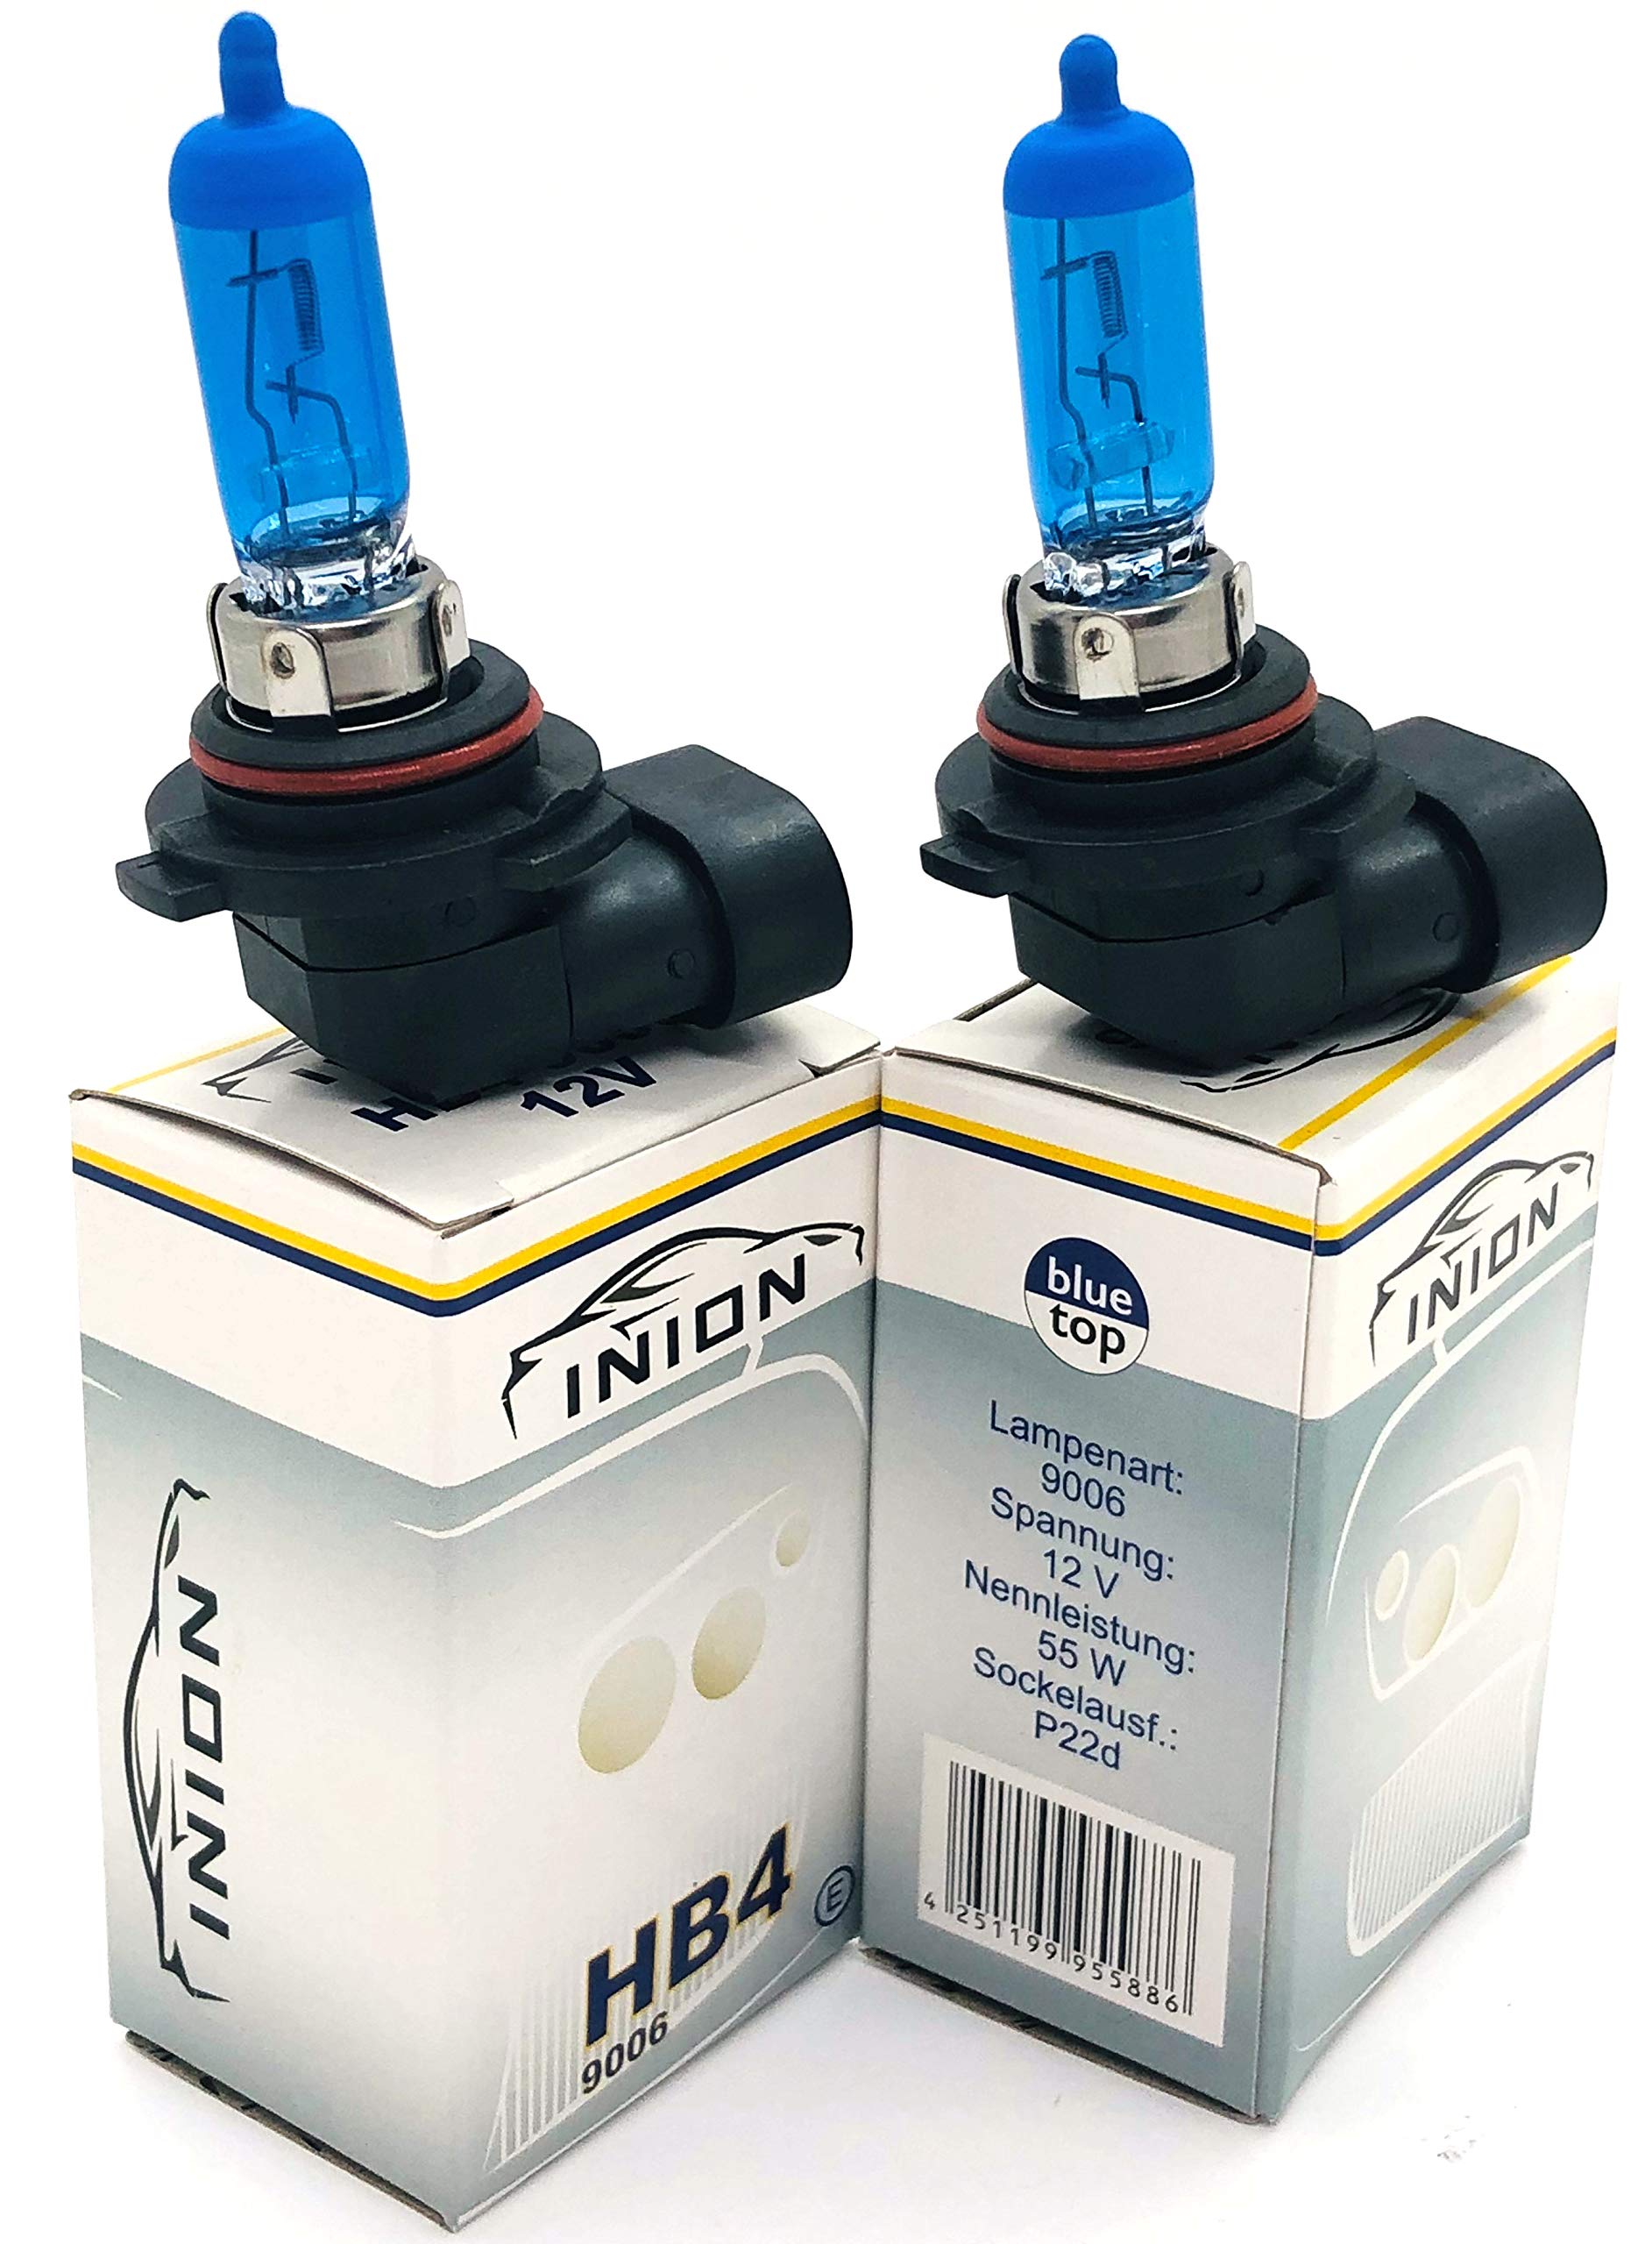 INION 2x Stück HB4 51W 9006 P22d 12V Halogen Lampen Blue Vision Optik Faltschachtel (HB4) von INION